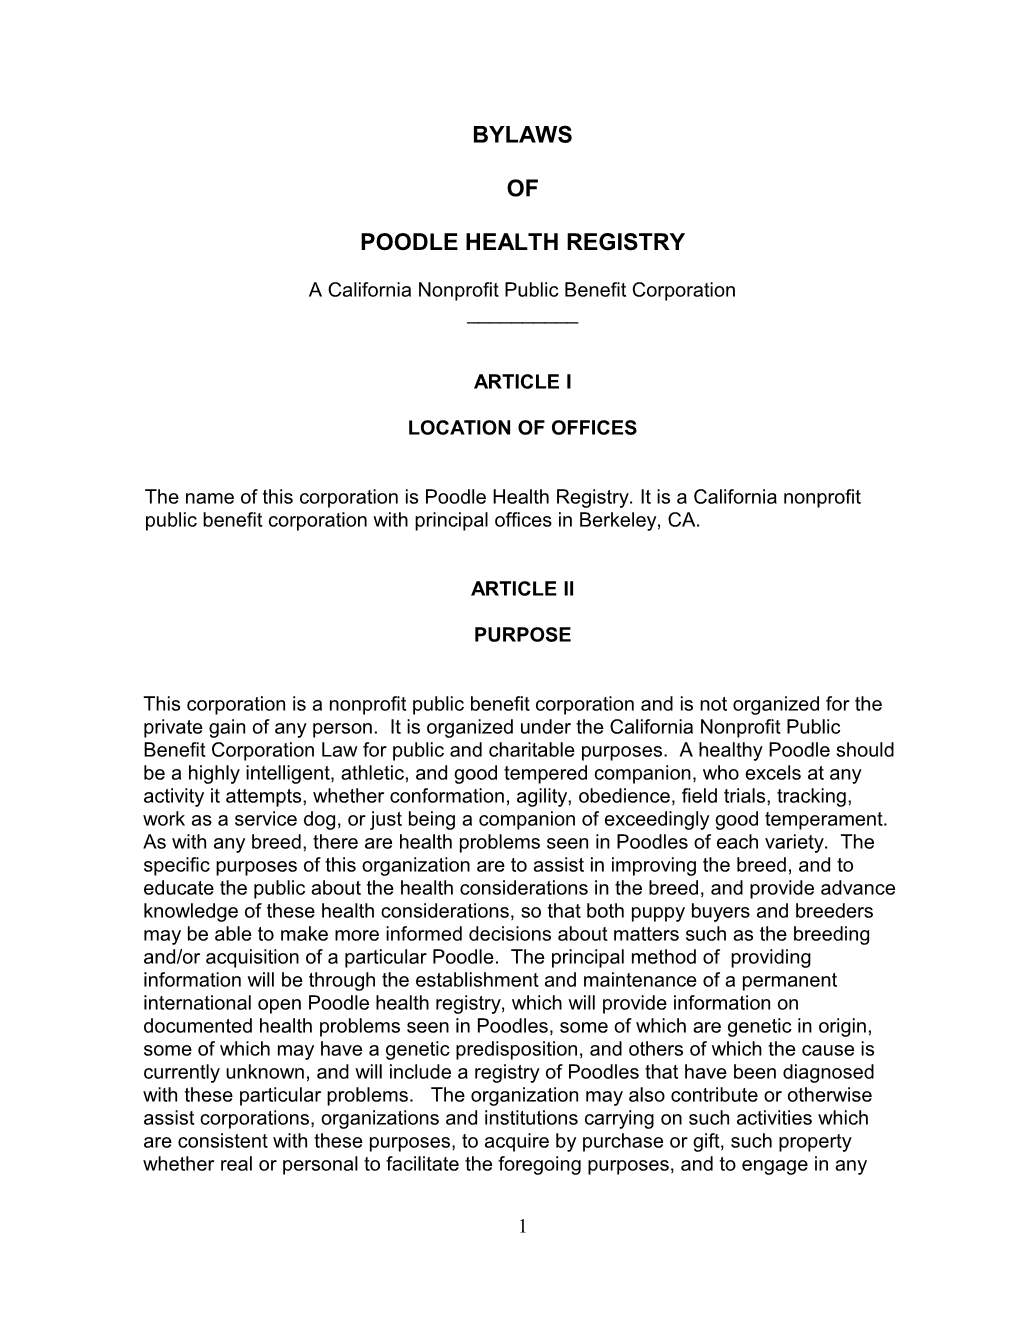 Poodle Health Registry